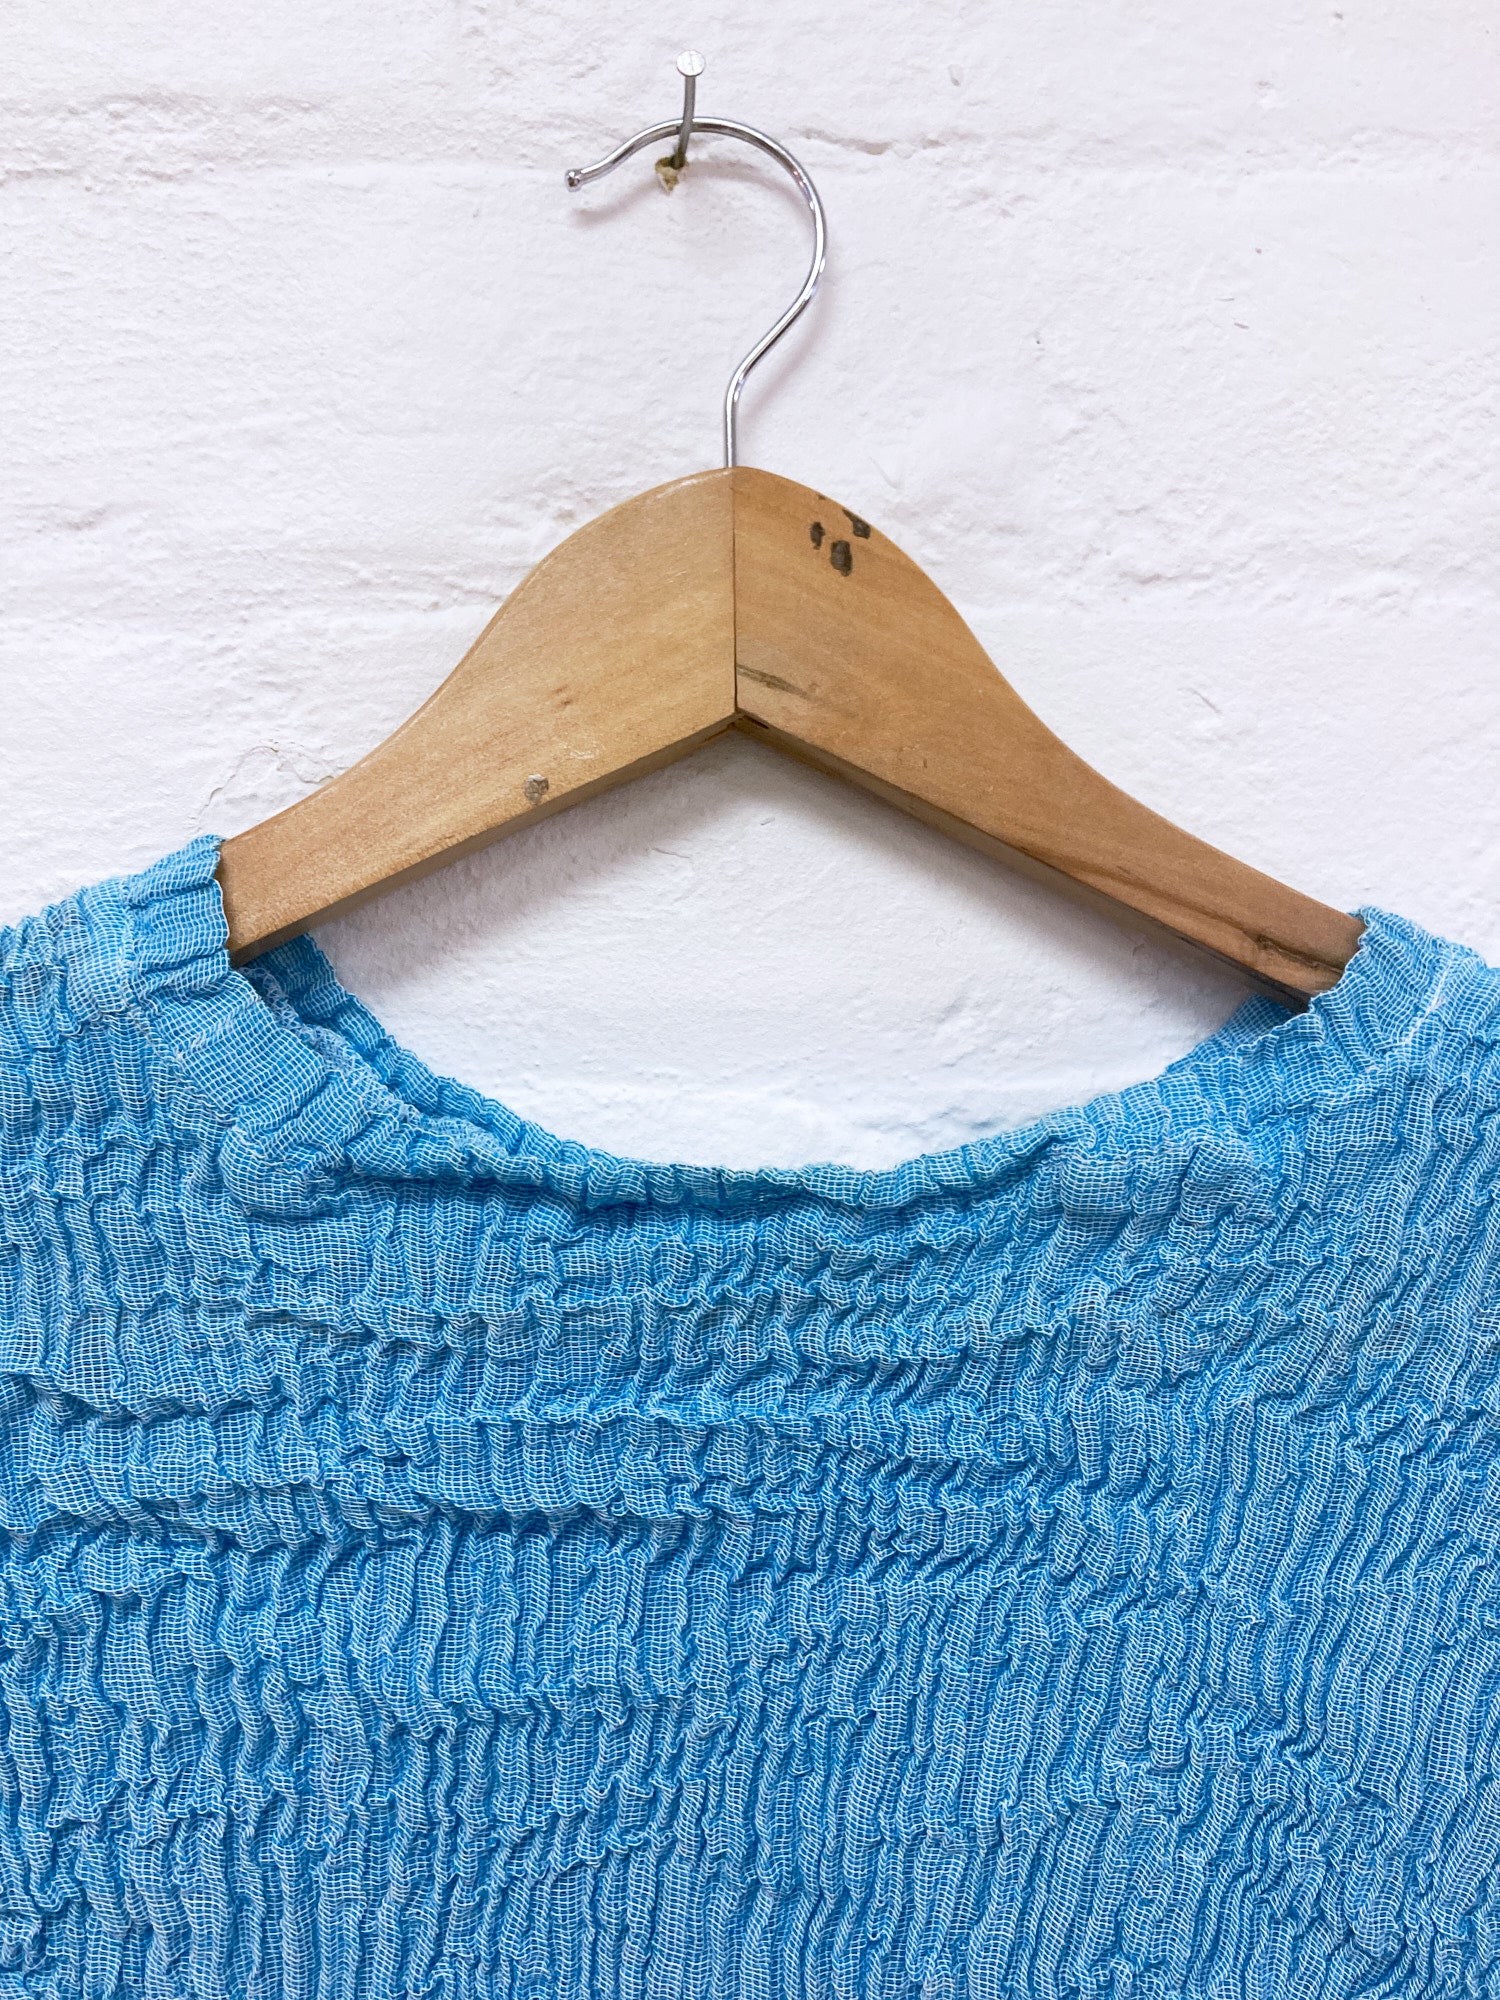 Kyoichi Fujita blue poly cotton wrinkled gauze t-shirt and skirt set - size 38